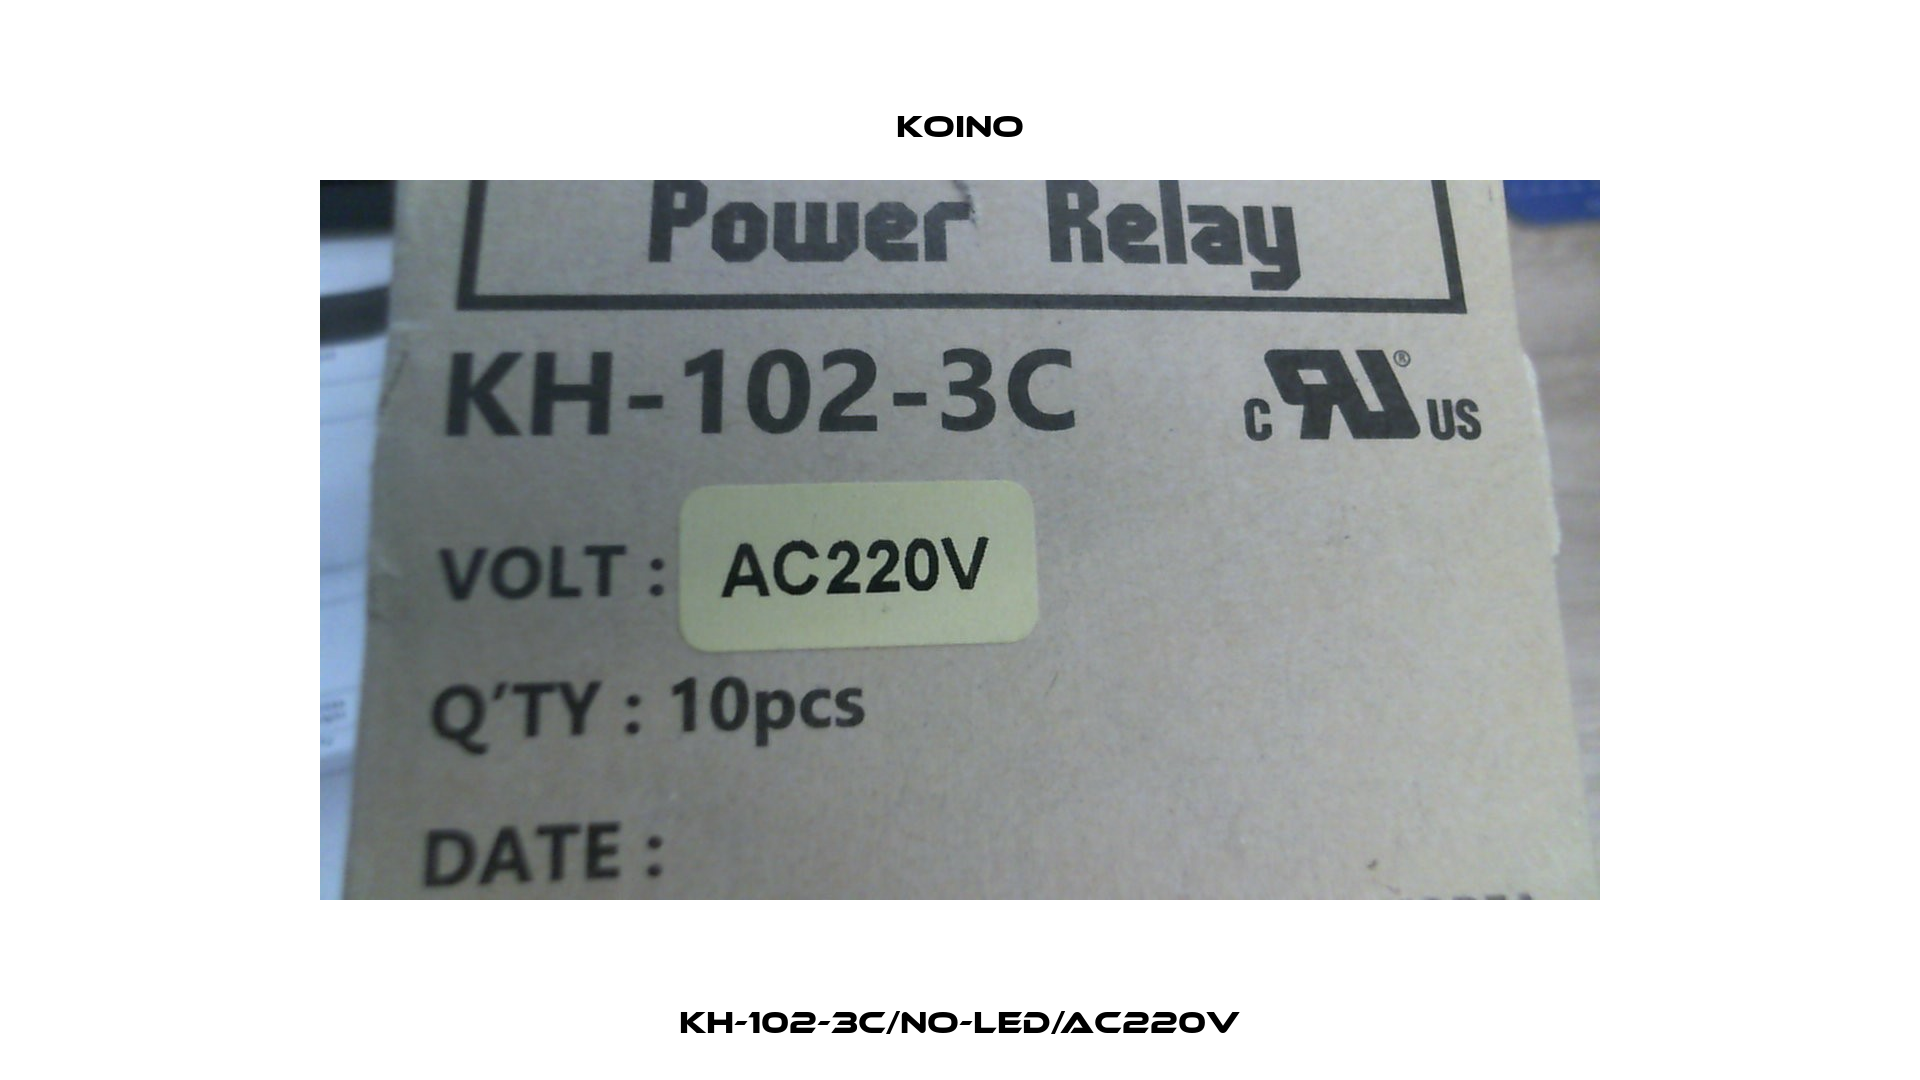 KH-102-3C/no-LED/AC220V Koino